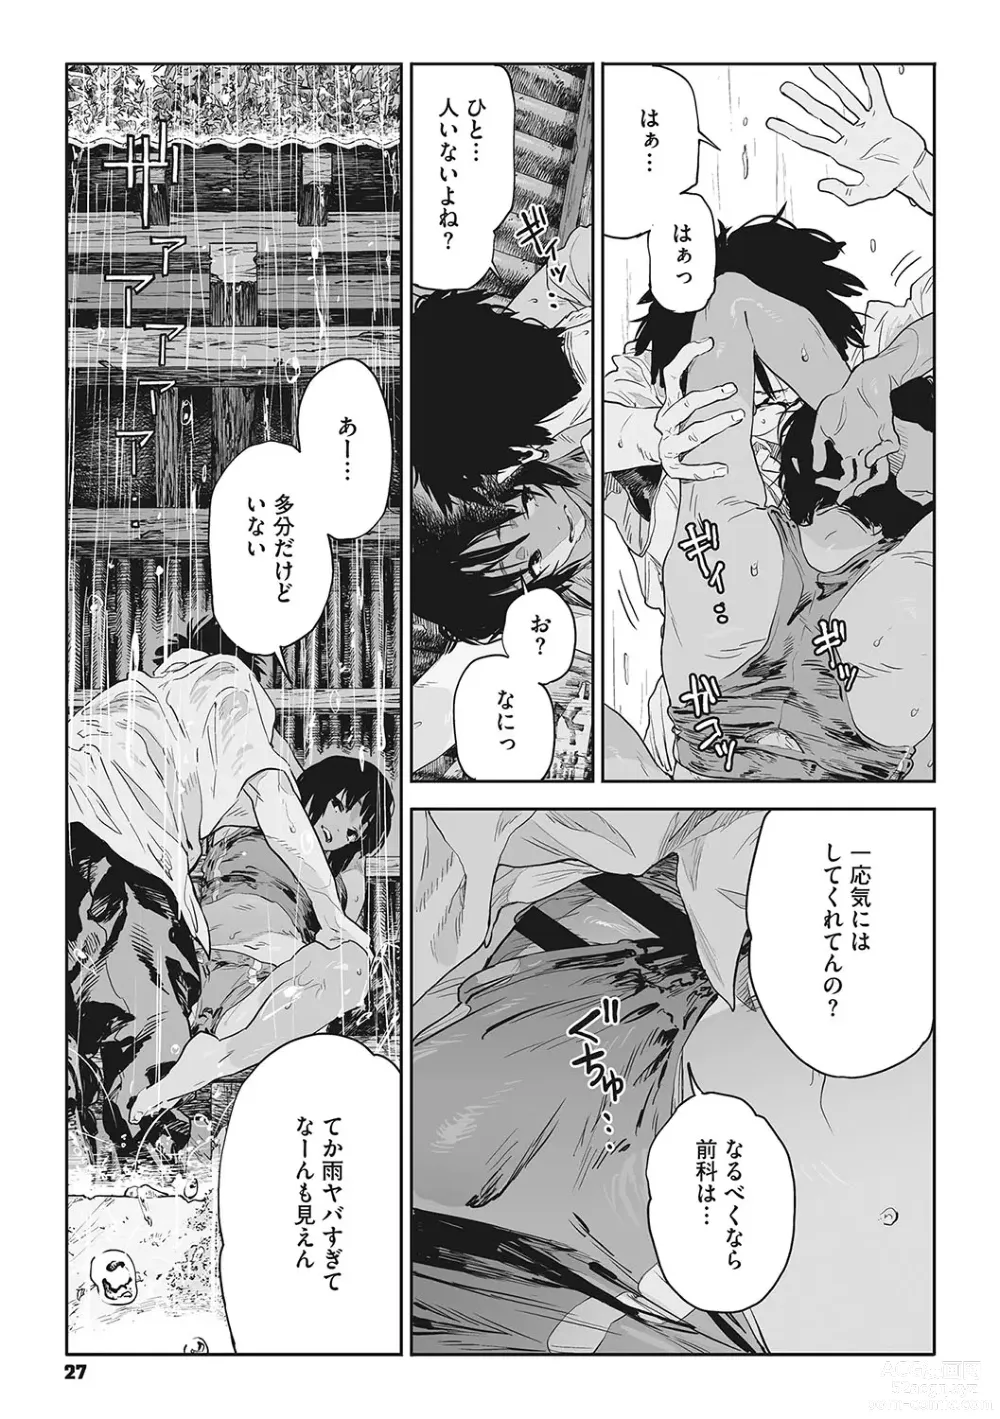 Page 26 of manga Ito o Yoru